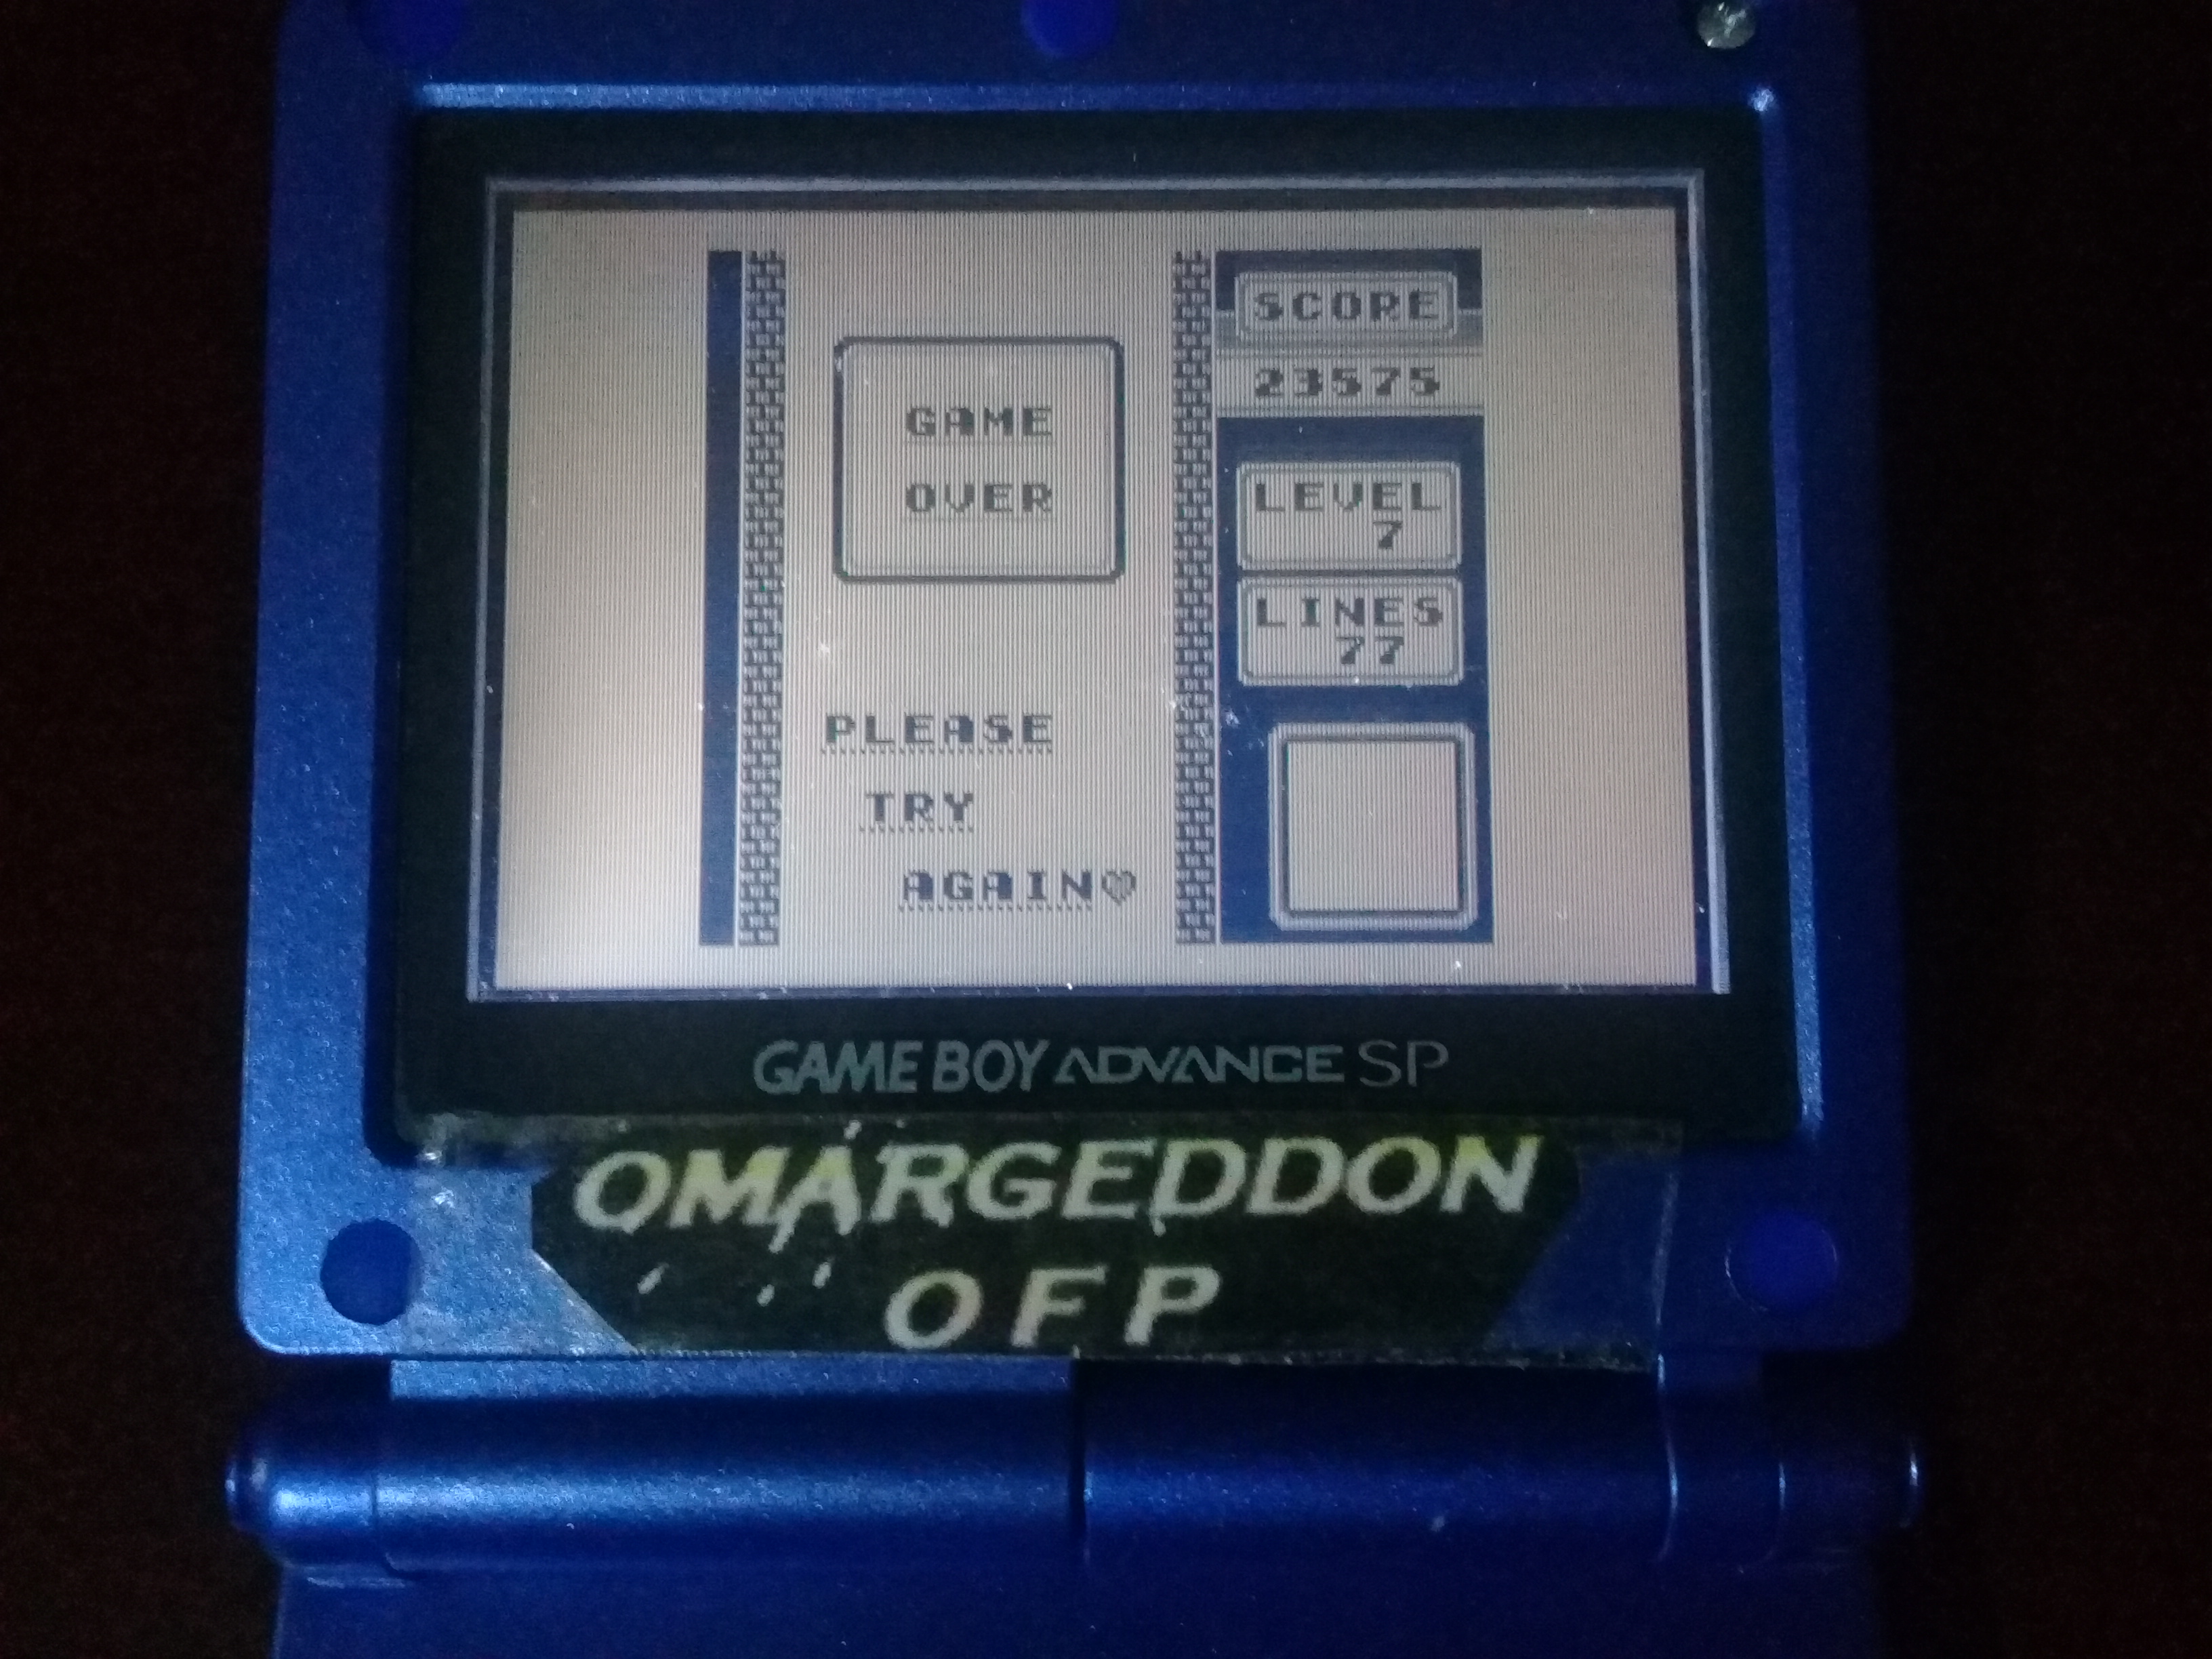 omargeddon: Tetris [Lines] (Game Boy) 77 points on 2021-09-25 08:46:44